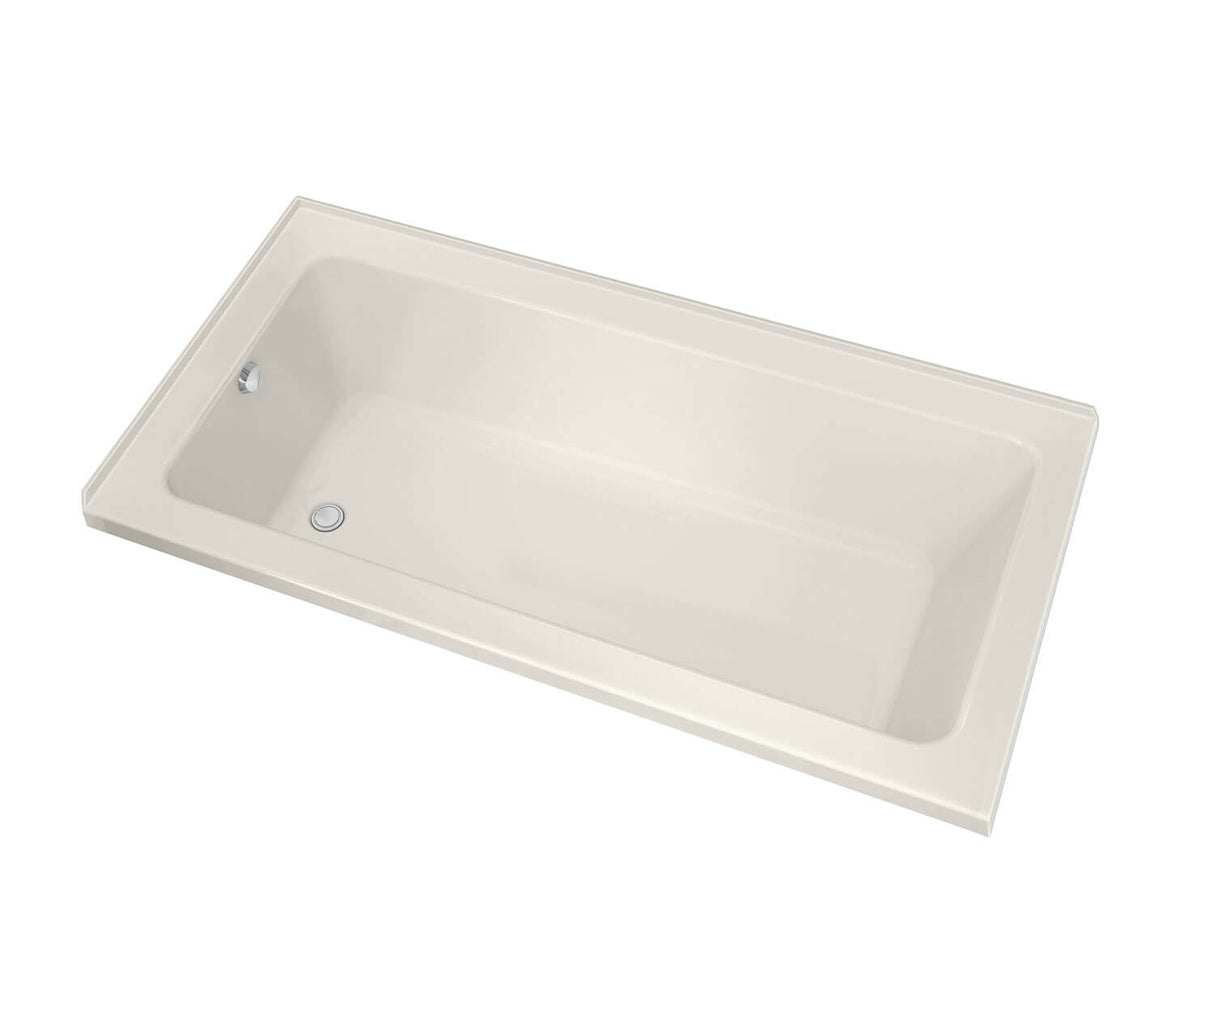 MAAX 106208-L-097-007 Pose 6636 IF Acrylic Corner Left Left-Hand Drain Combined Whirlpool & Aeroeffect Bathtub in Biscuit